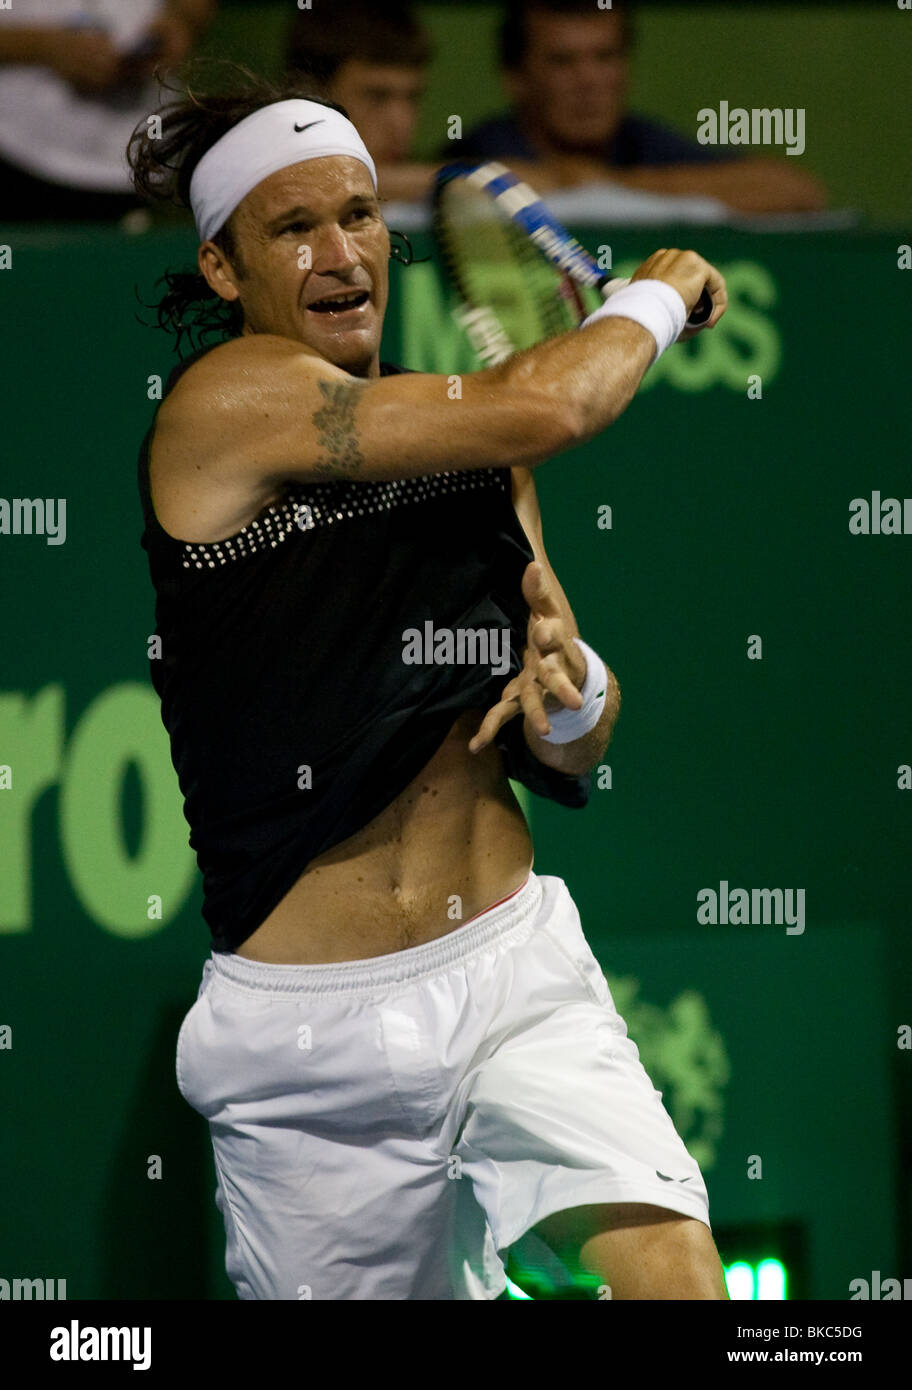 Spanish tennis player Carlos Moya after hitting a drive shot Stock Photo -  Alamy